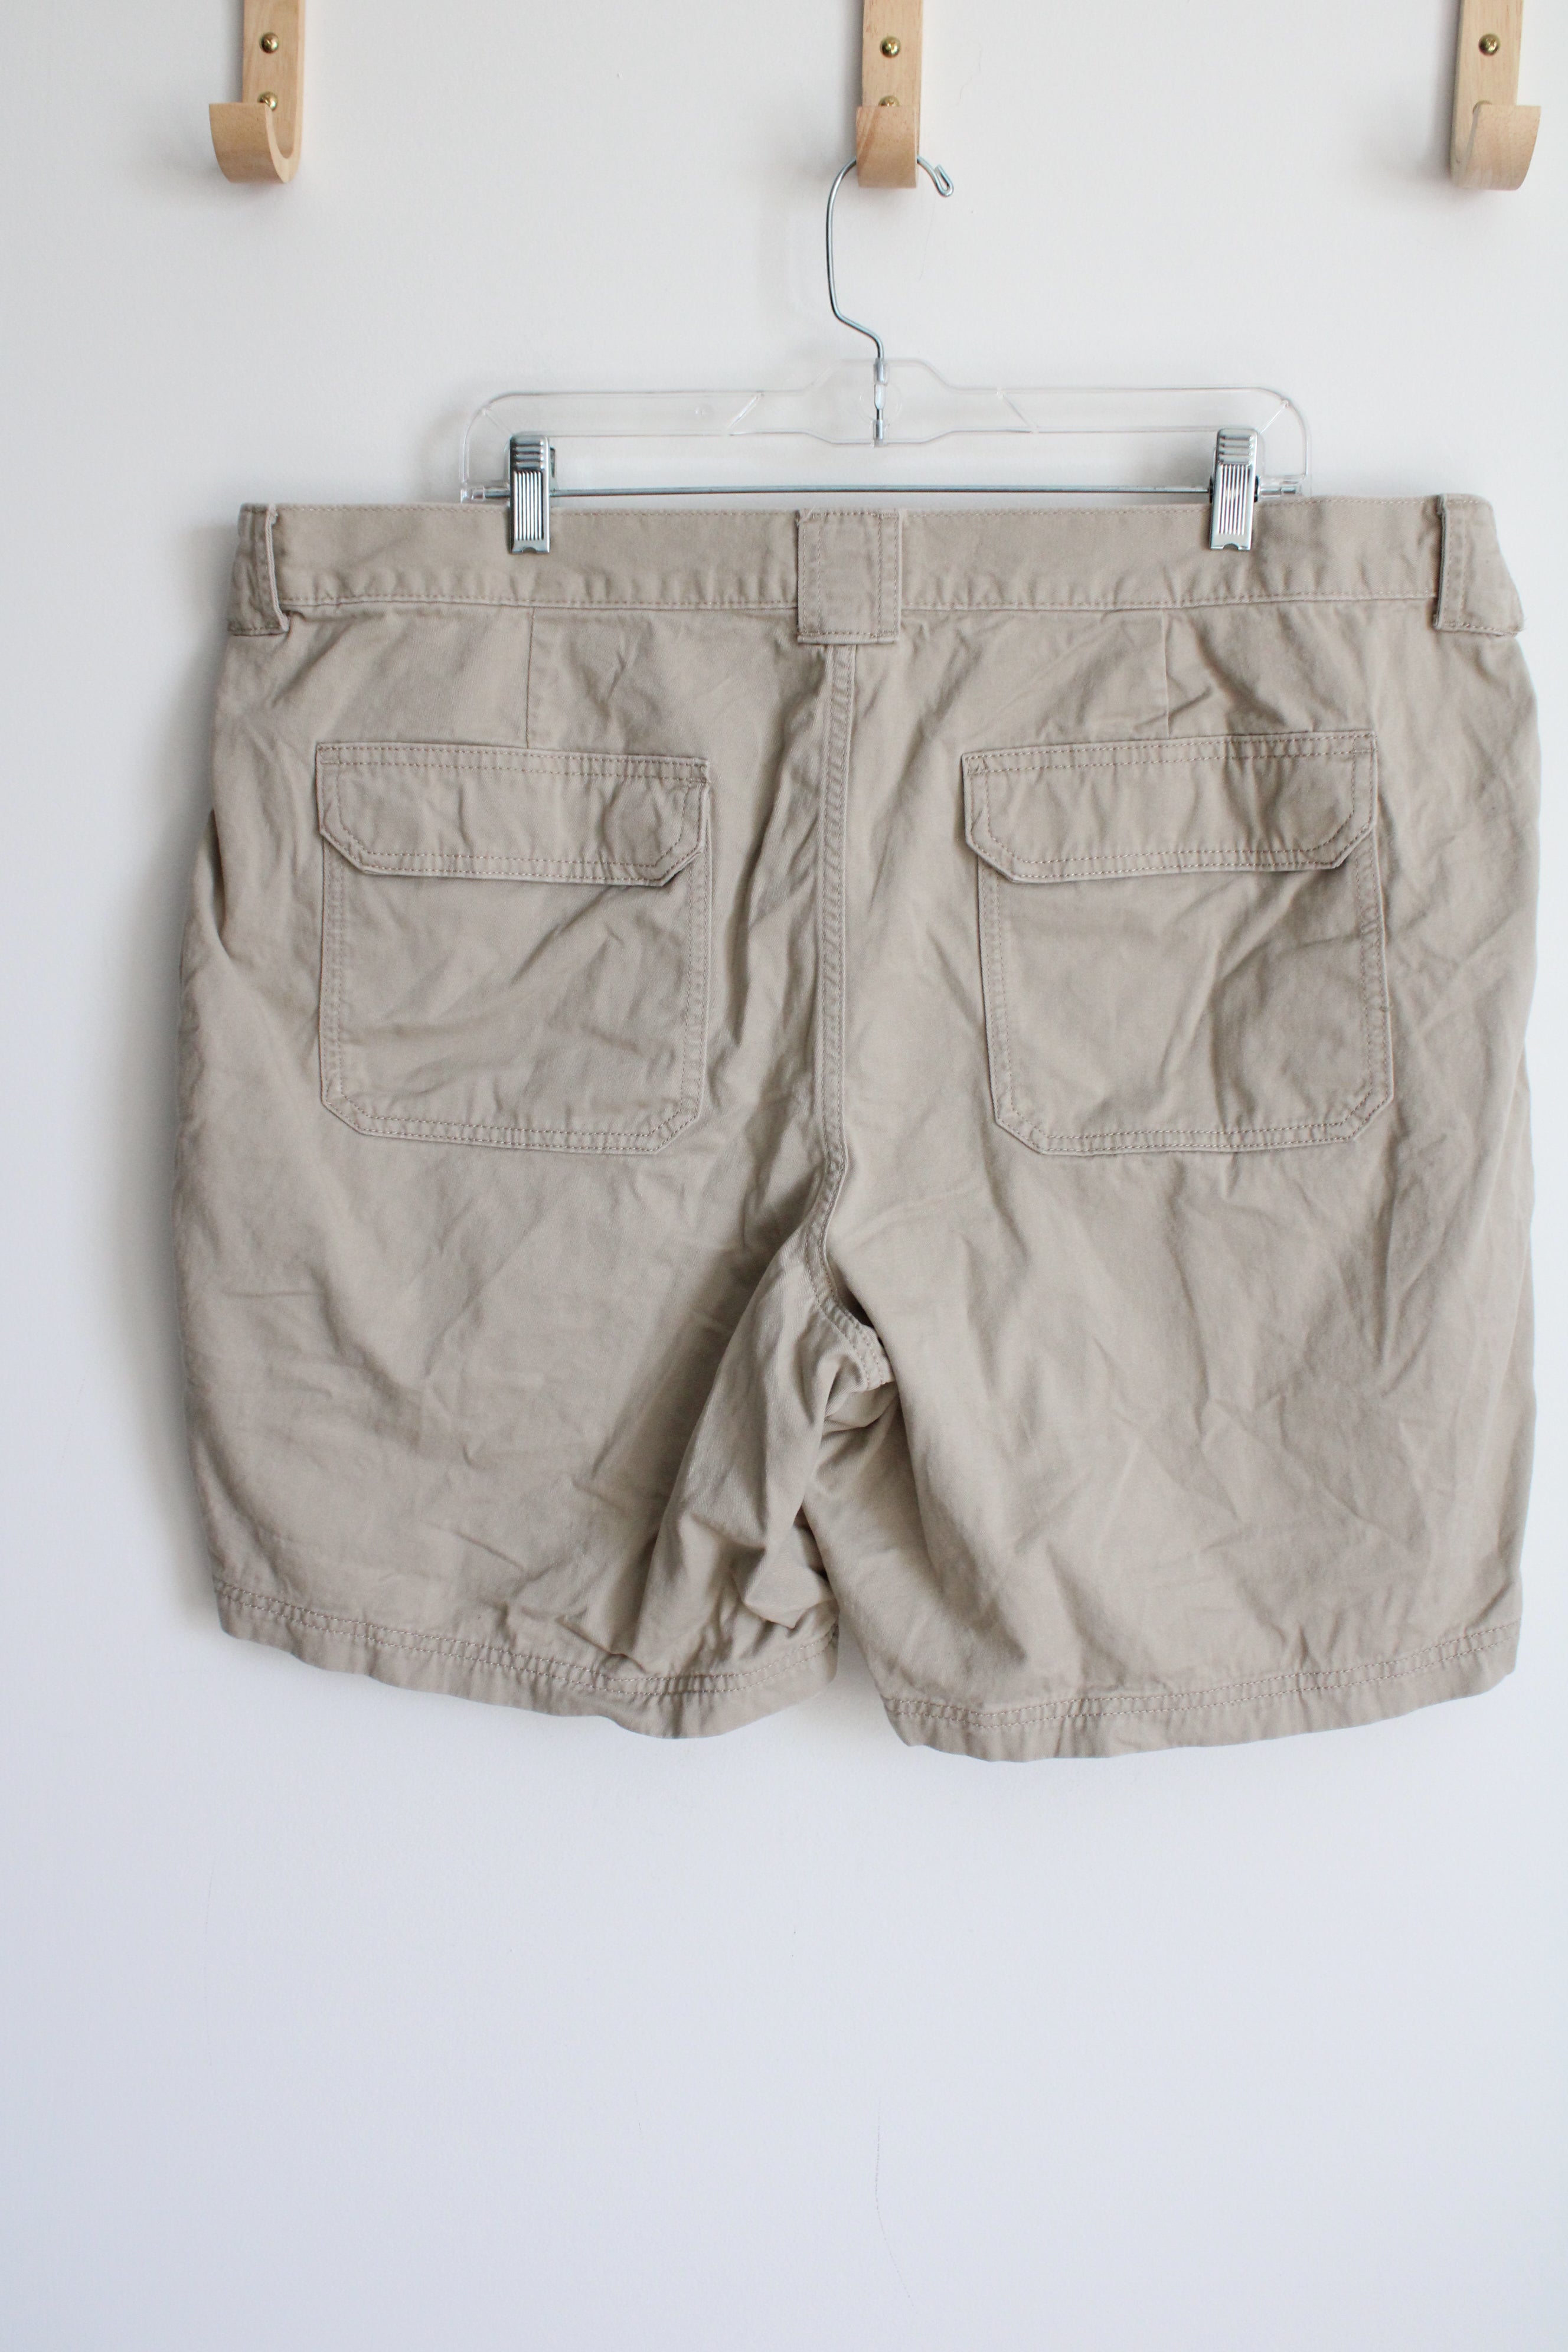 Croft & Barrow Tan Khaki Cargo Shorts